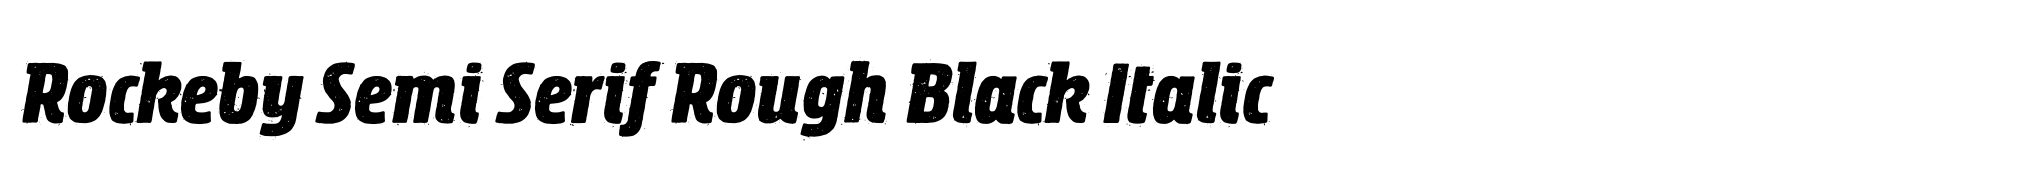 Rockeby Semi Serif Rough Black Italic image